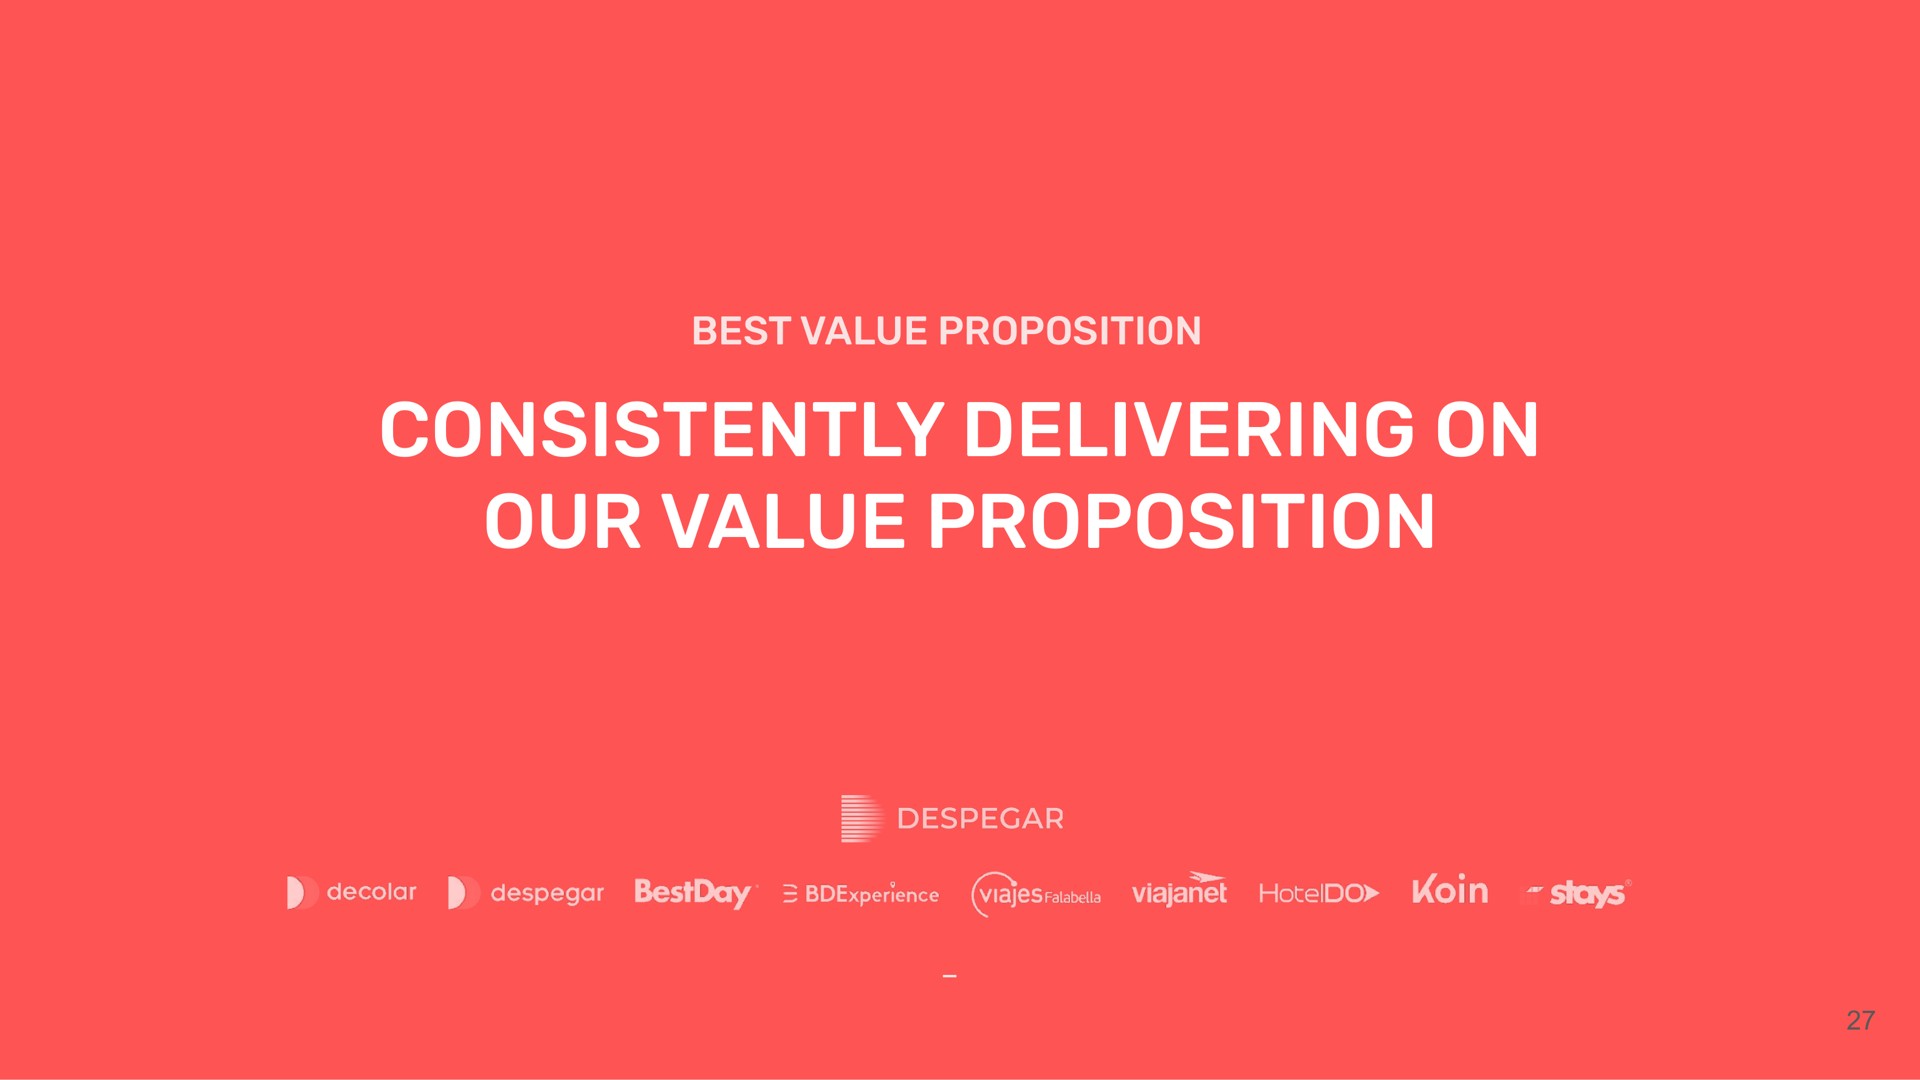 best value proposition consistently delivering on our value proposition | Despegar